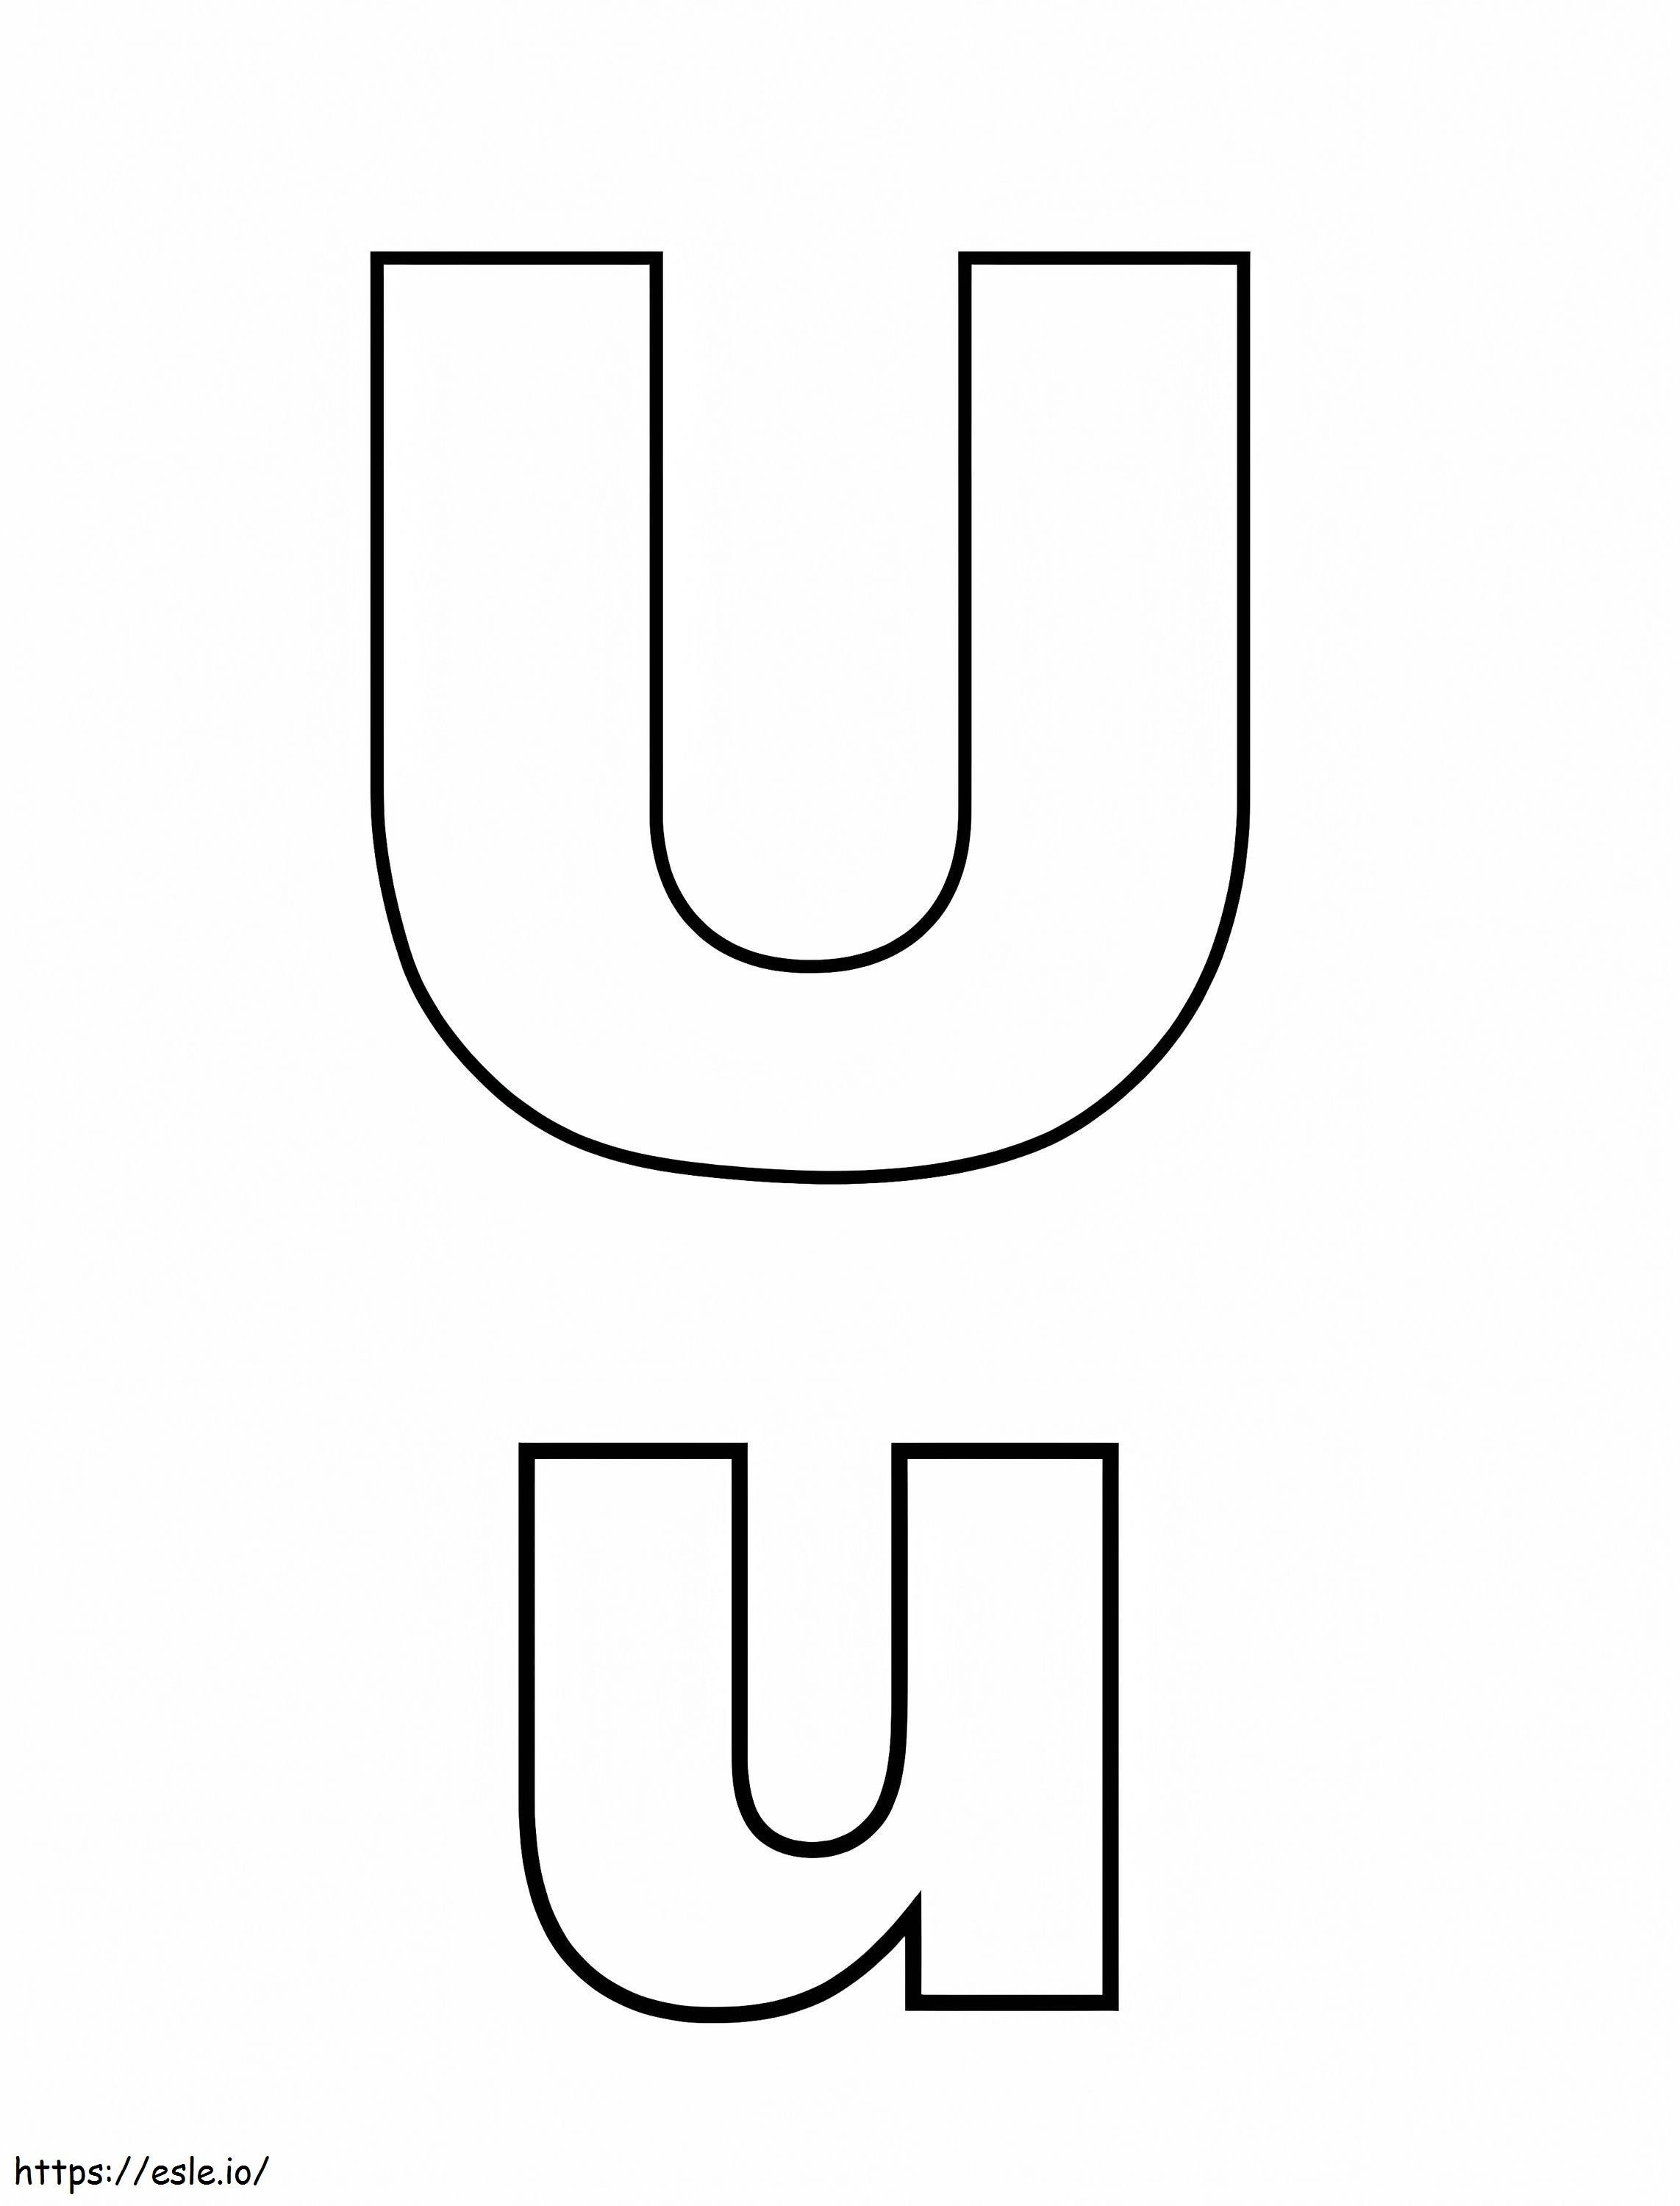 Letter U2 kleurplaat kleurplaat